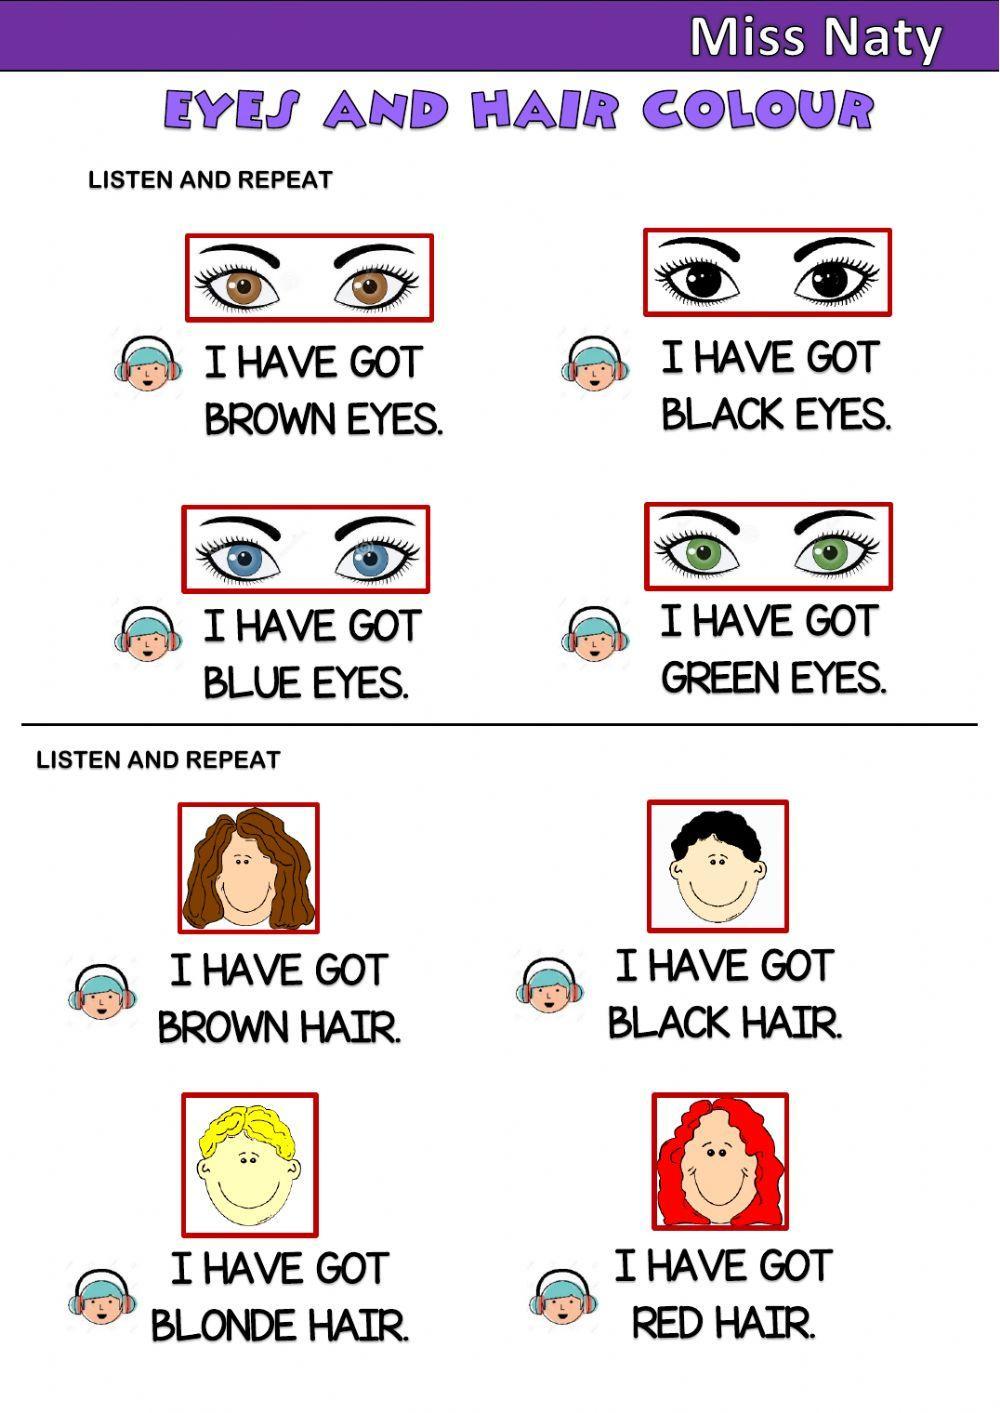 Eyes and Hair Colour